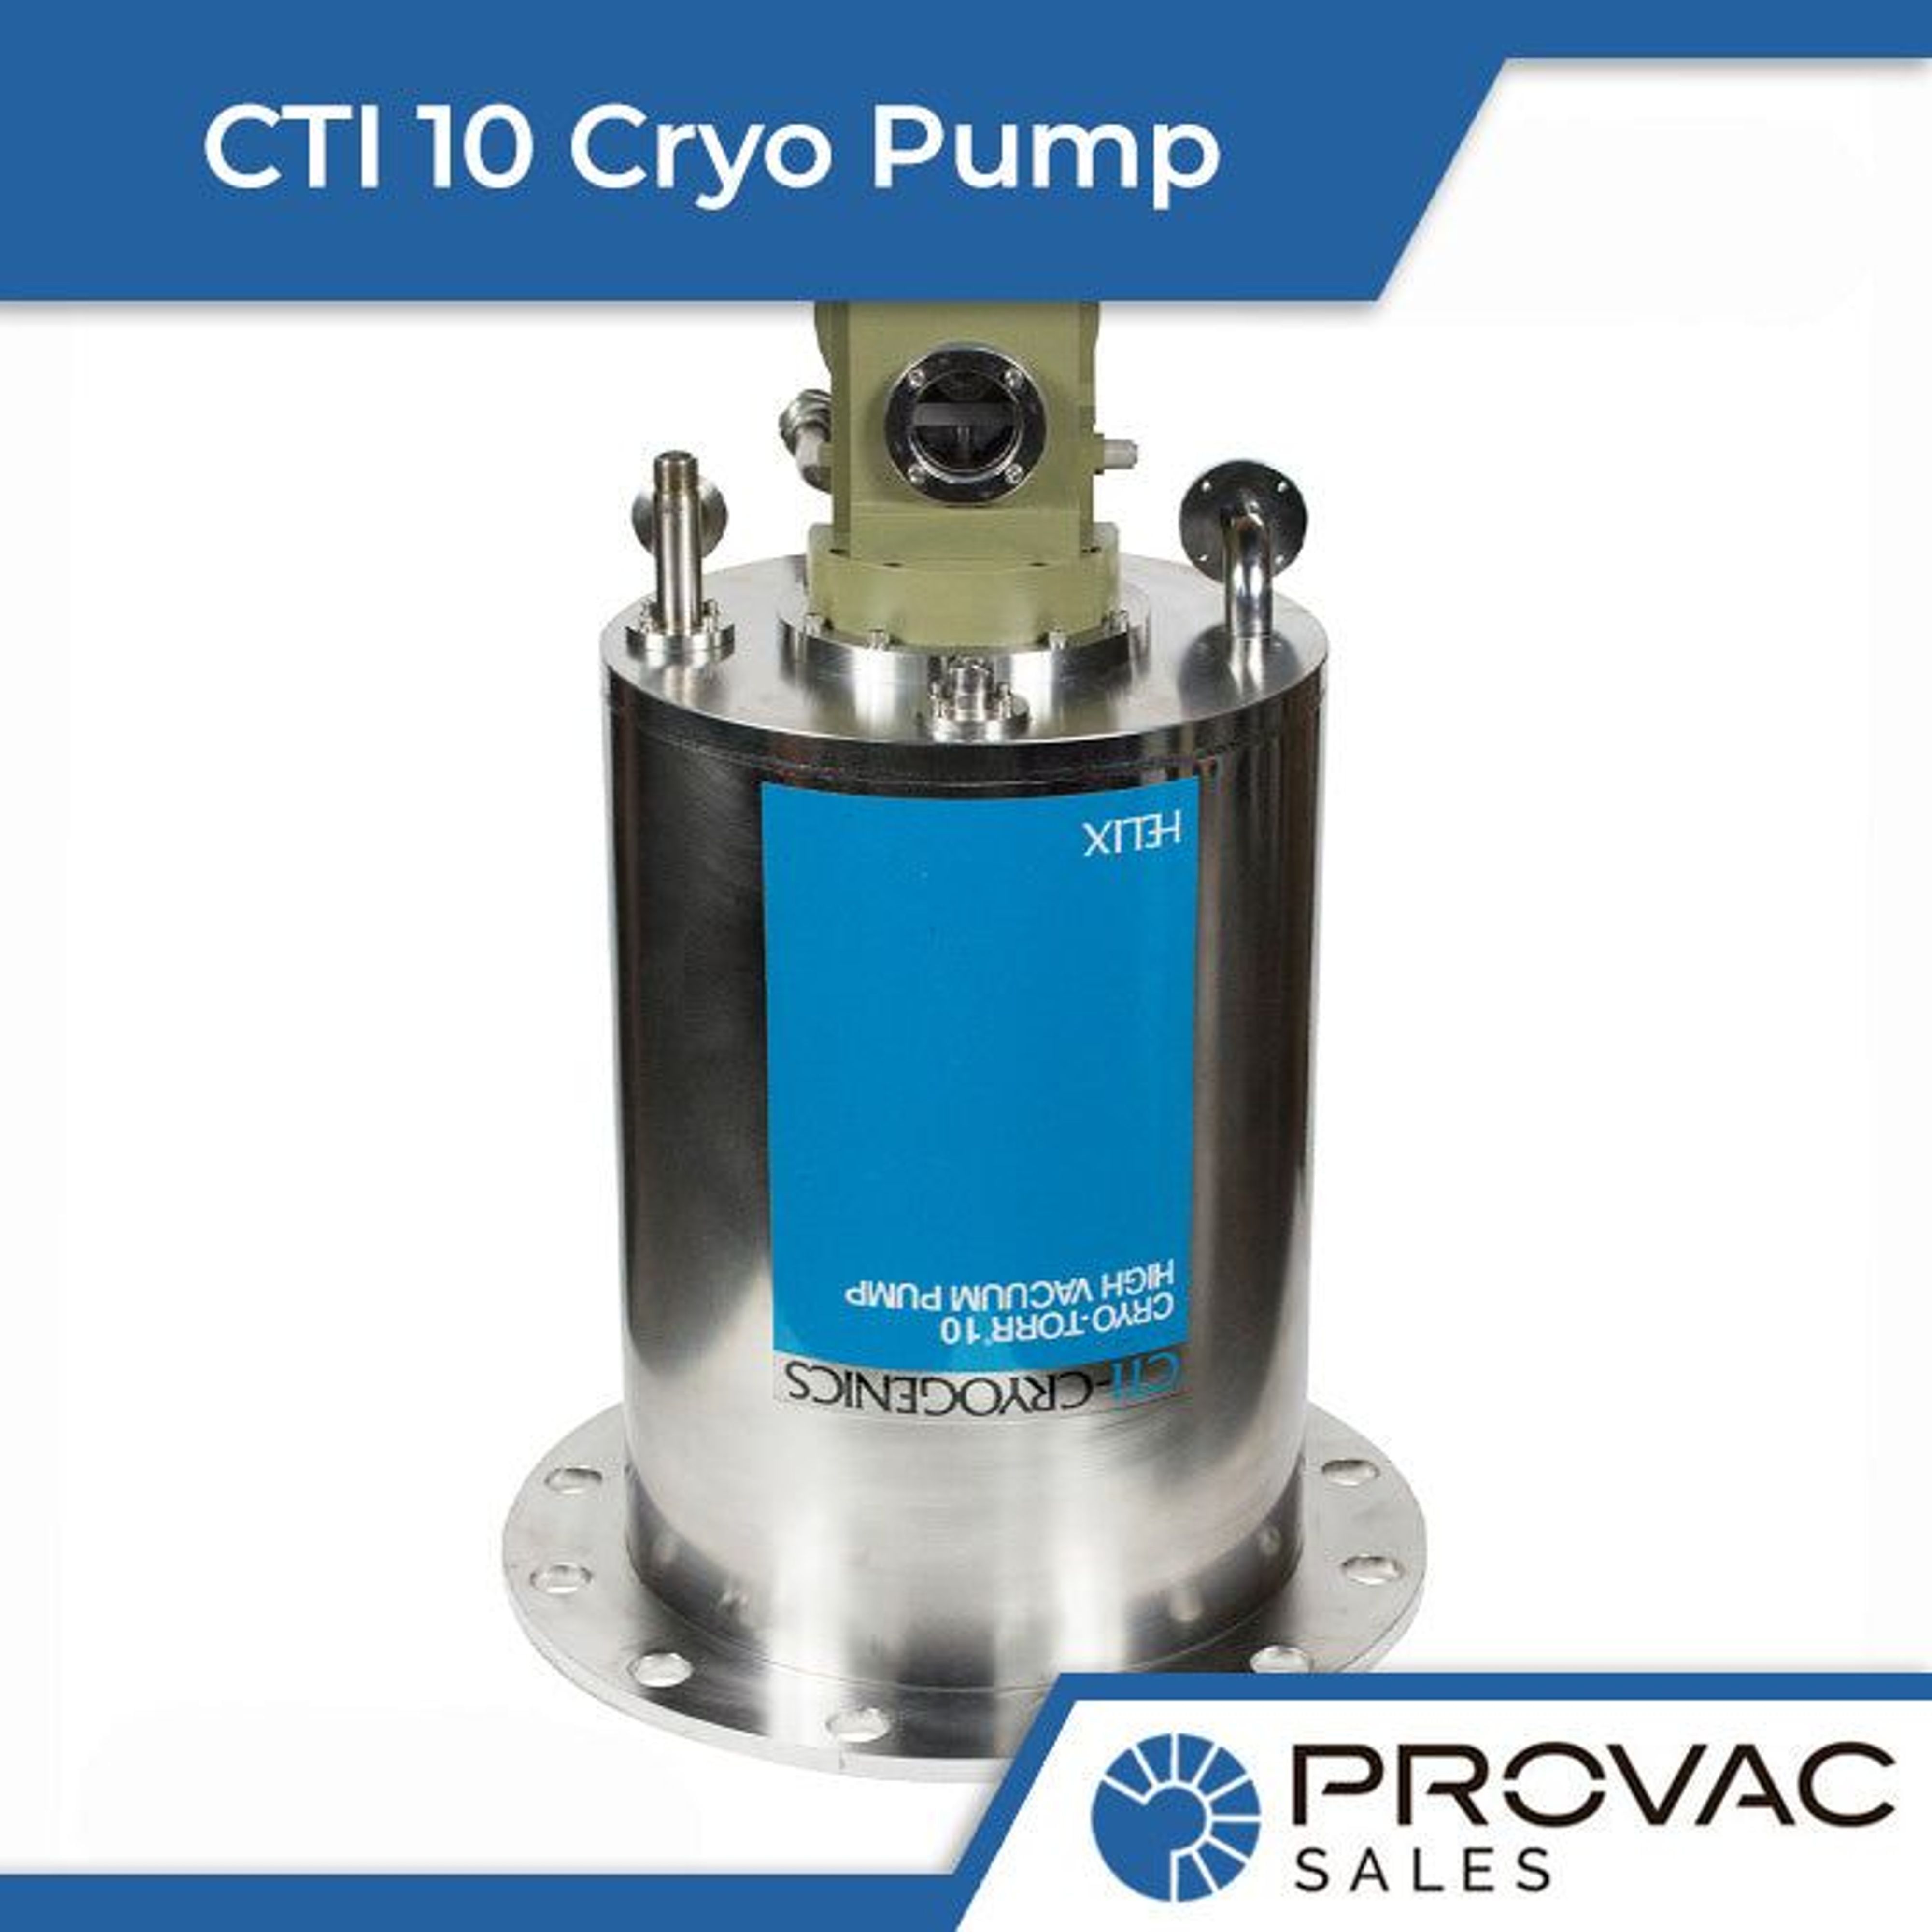 CTI 10 Cryo Pump Background